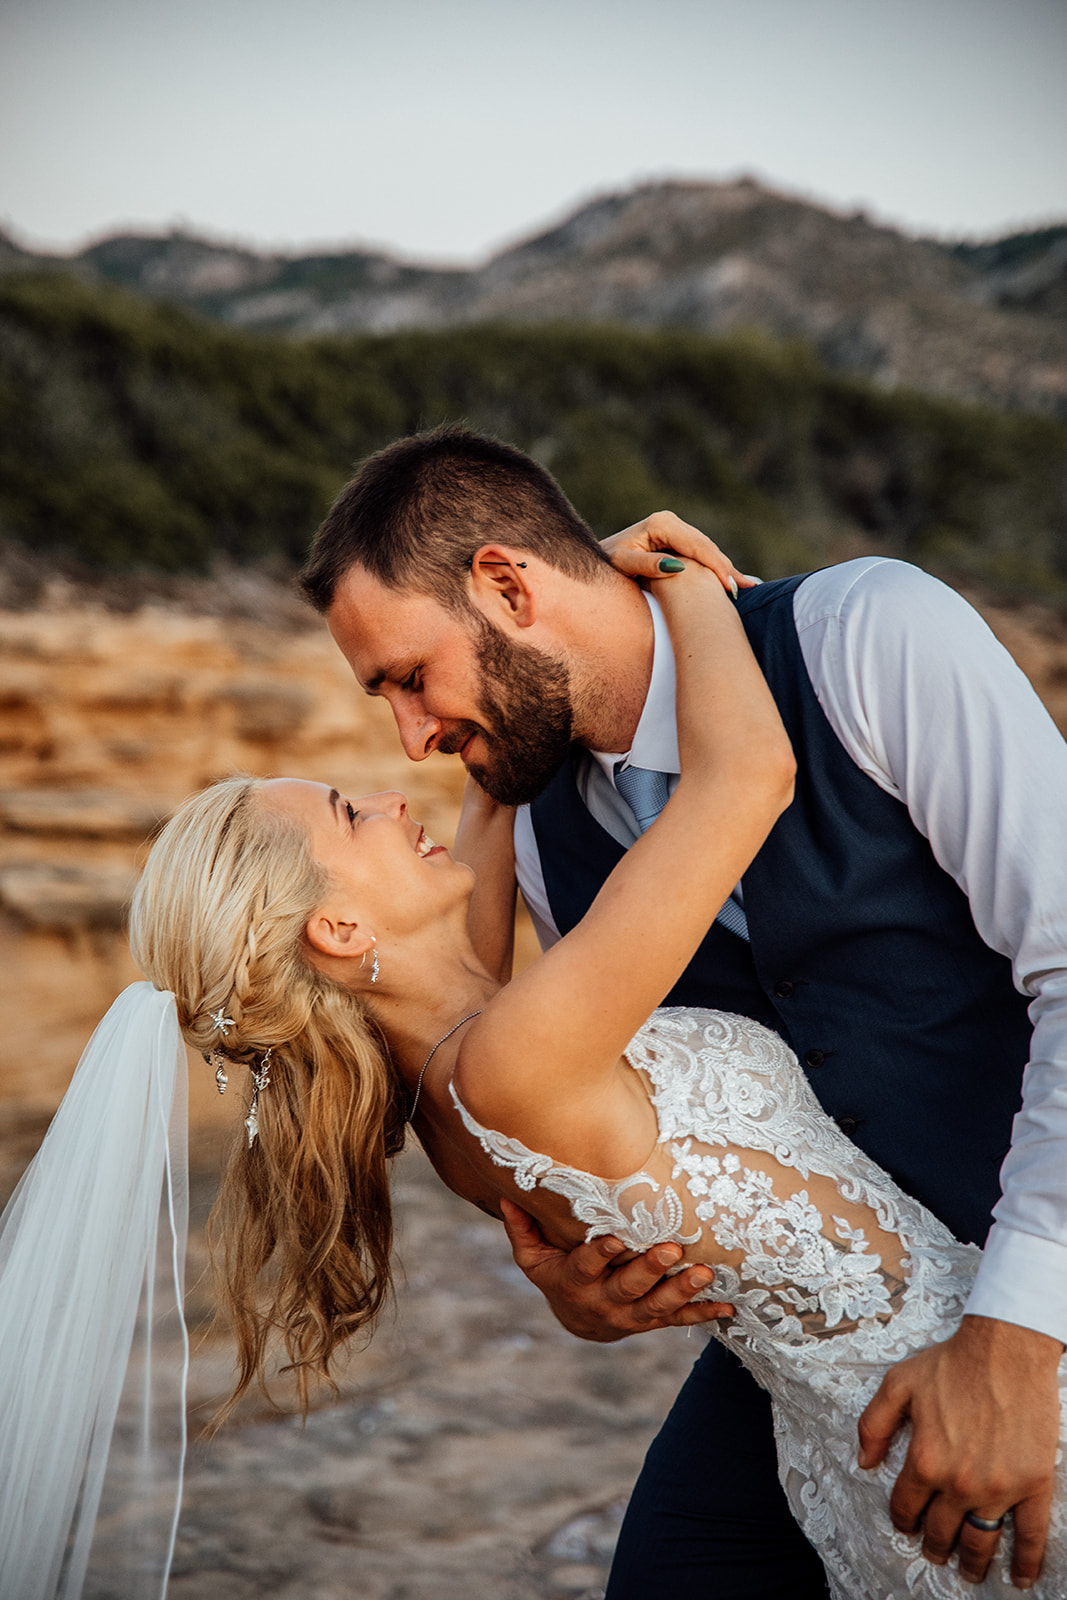 After Wedding Shooting Mallorca - Paar tanzt am Meer und den Klippen - Schleier weht im Wind 